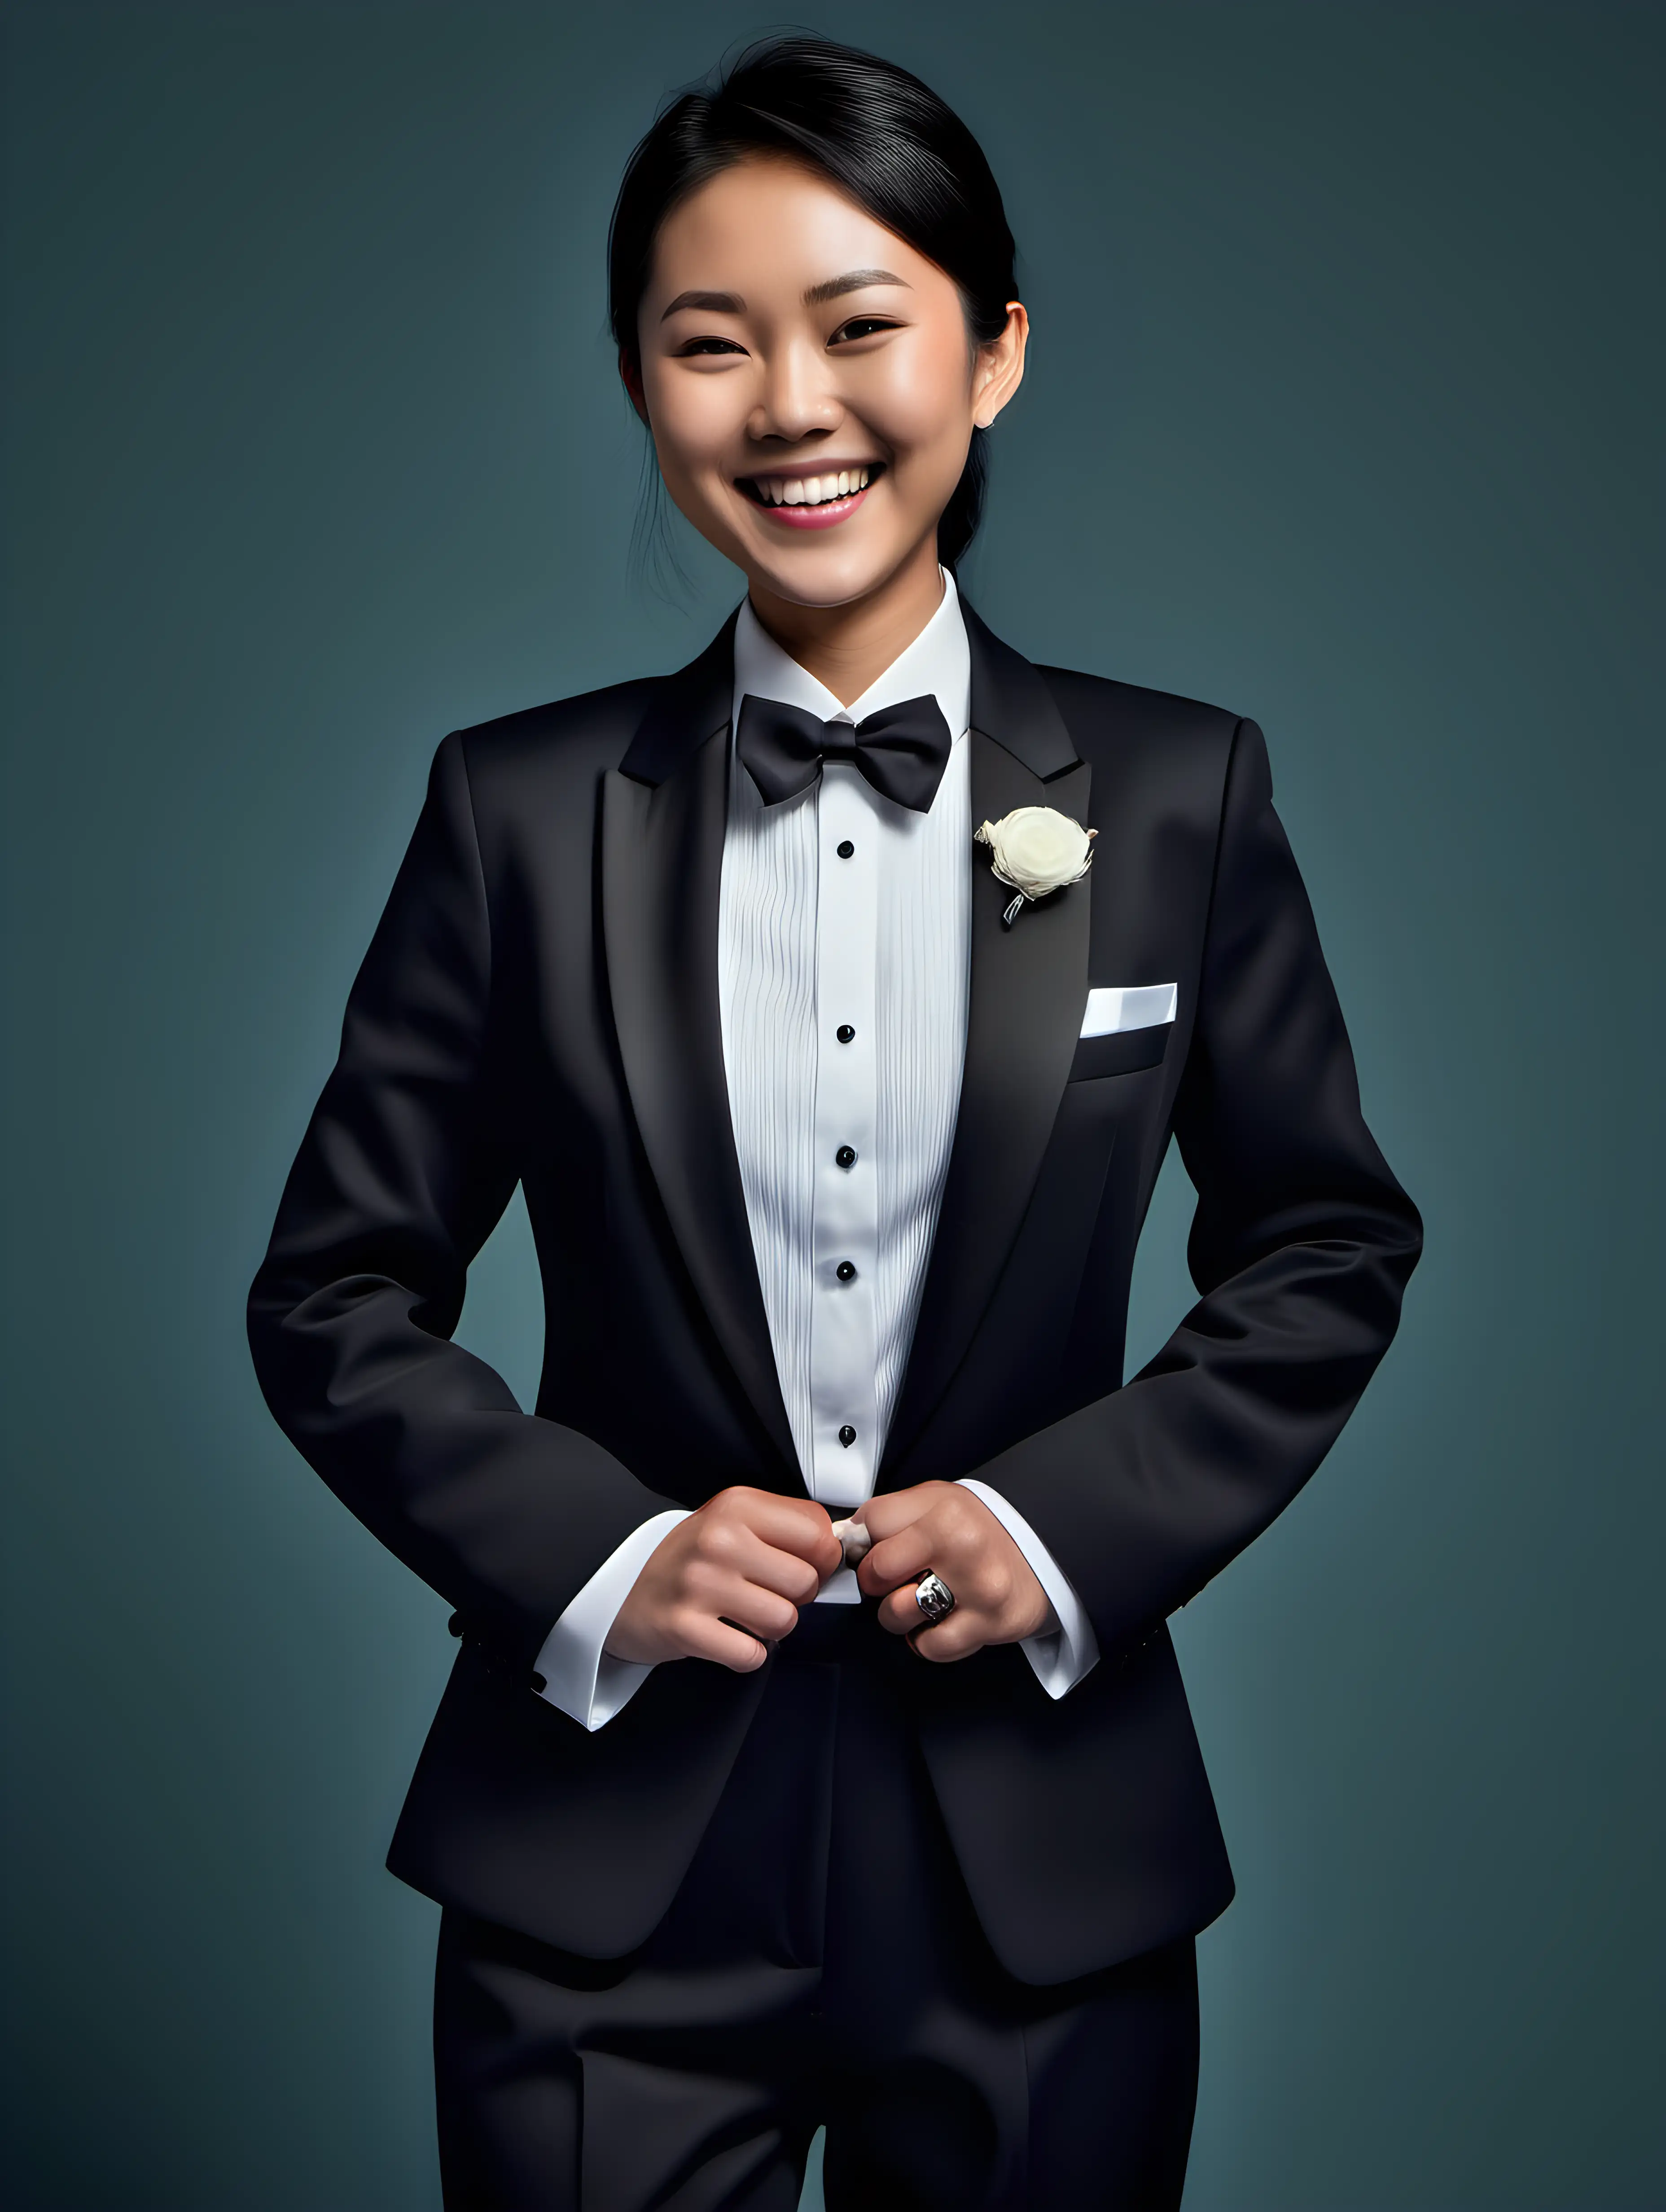 Smiling-Asian-Woman-in-Open-Tuxedo-Jacket-with-Cufflinks